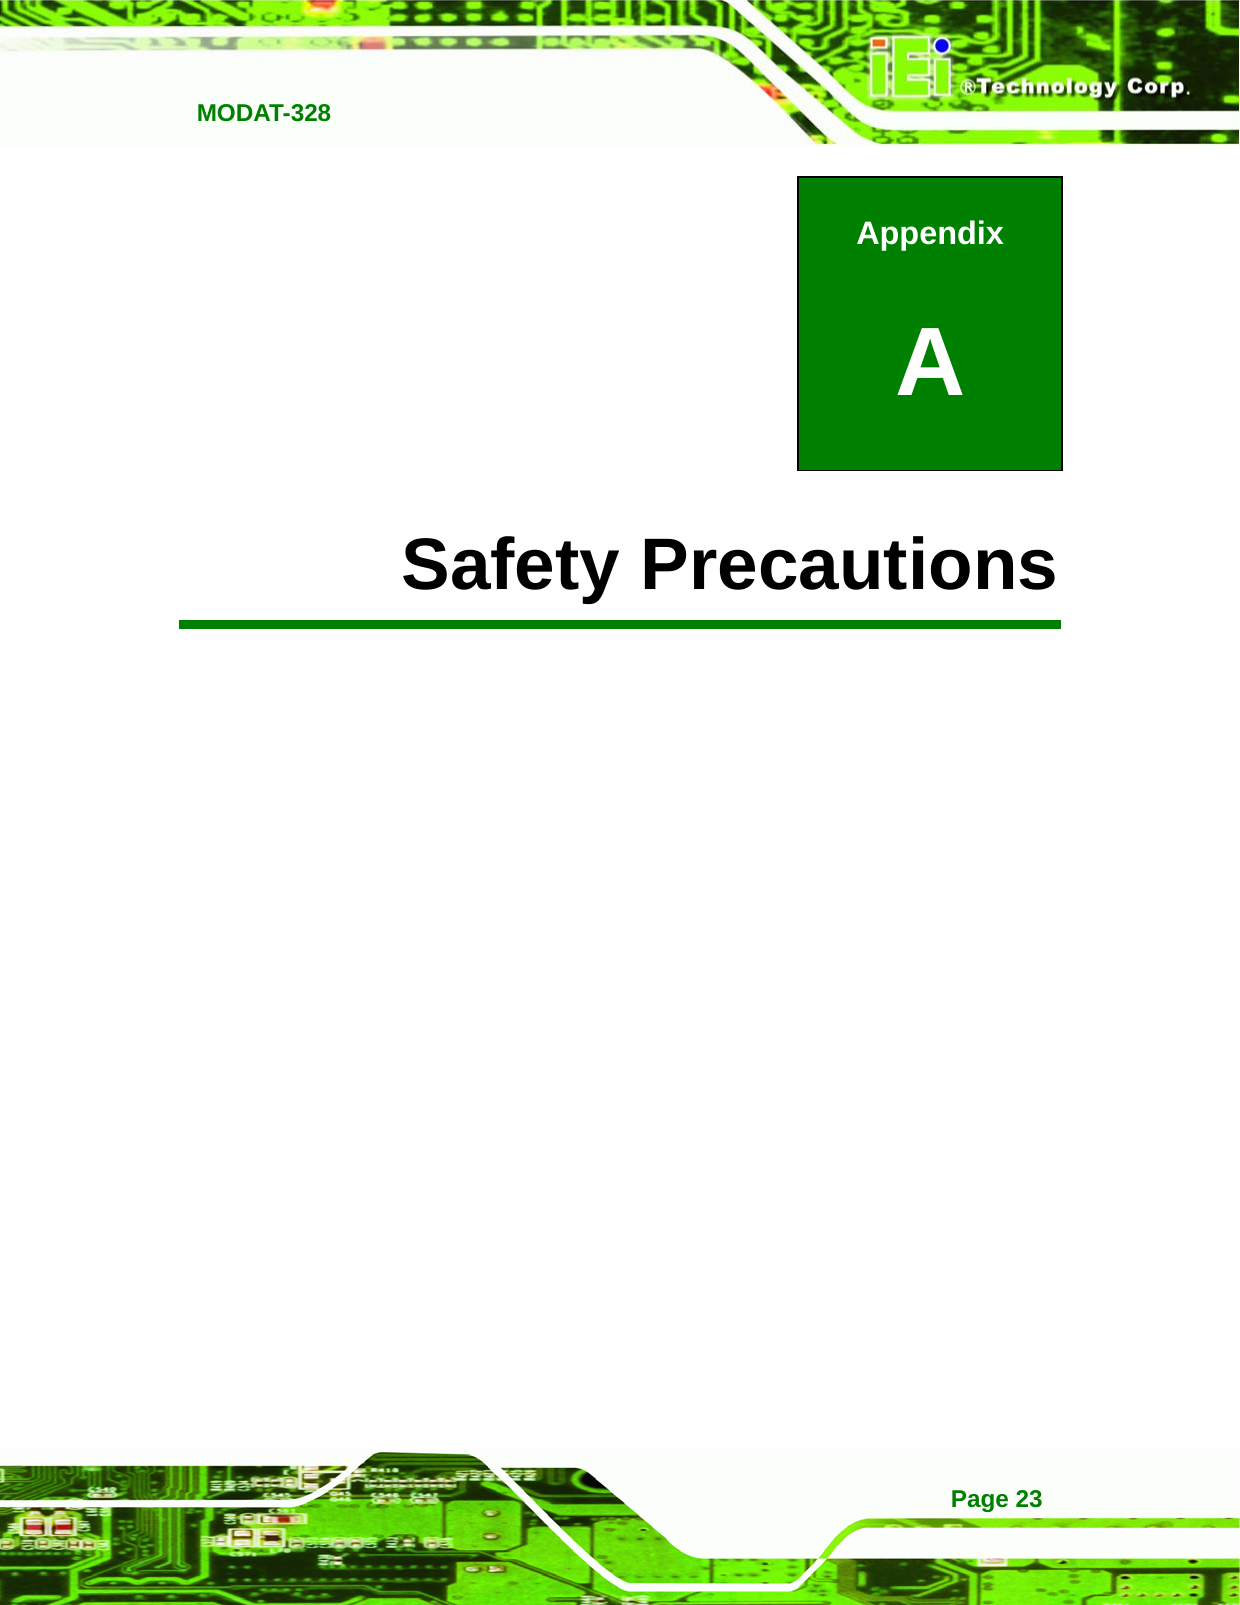   MODAT-328 Page 23Appendix A A Safety Precautions 